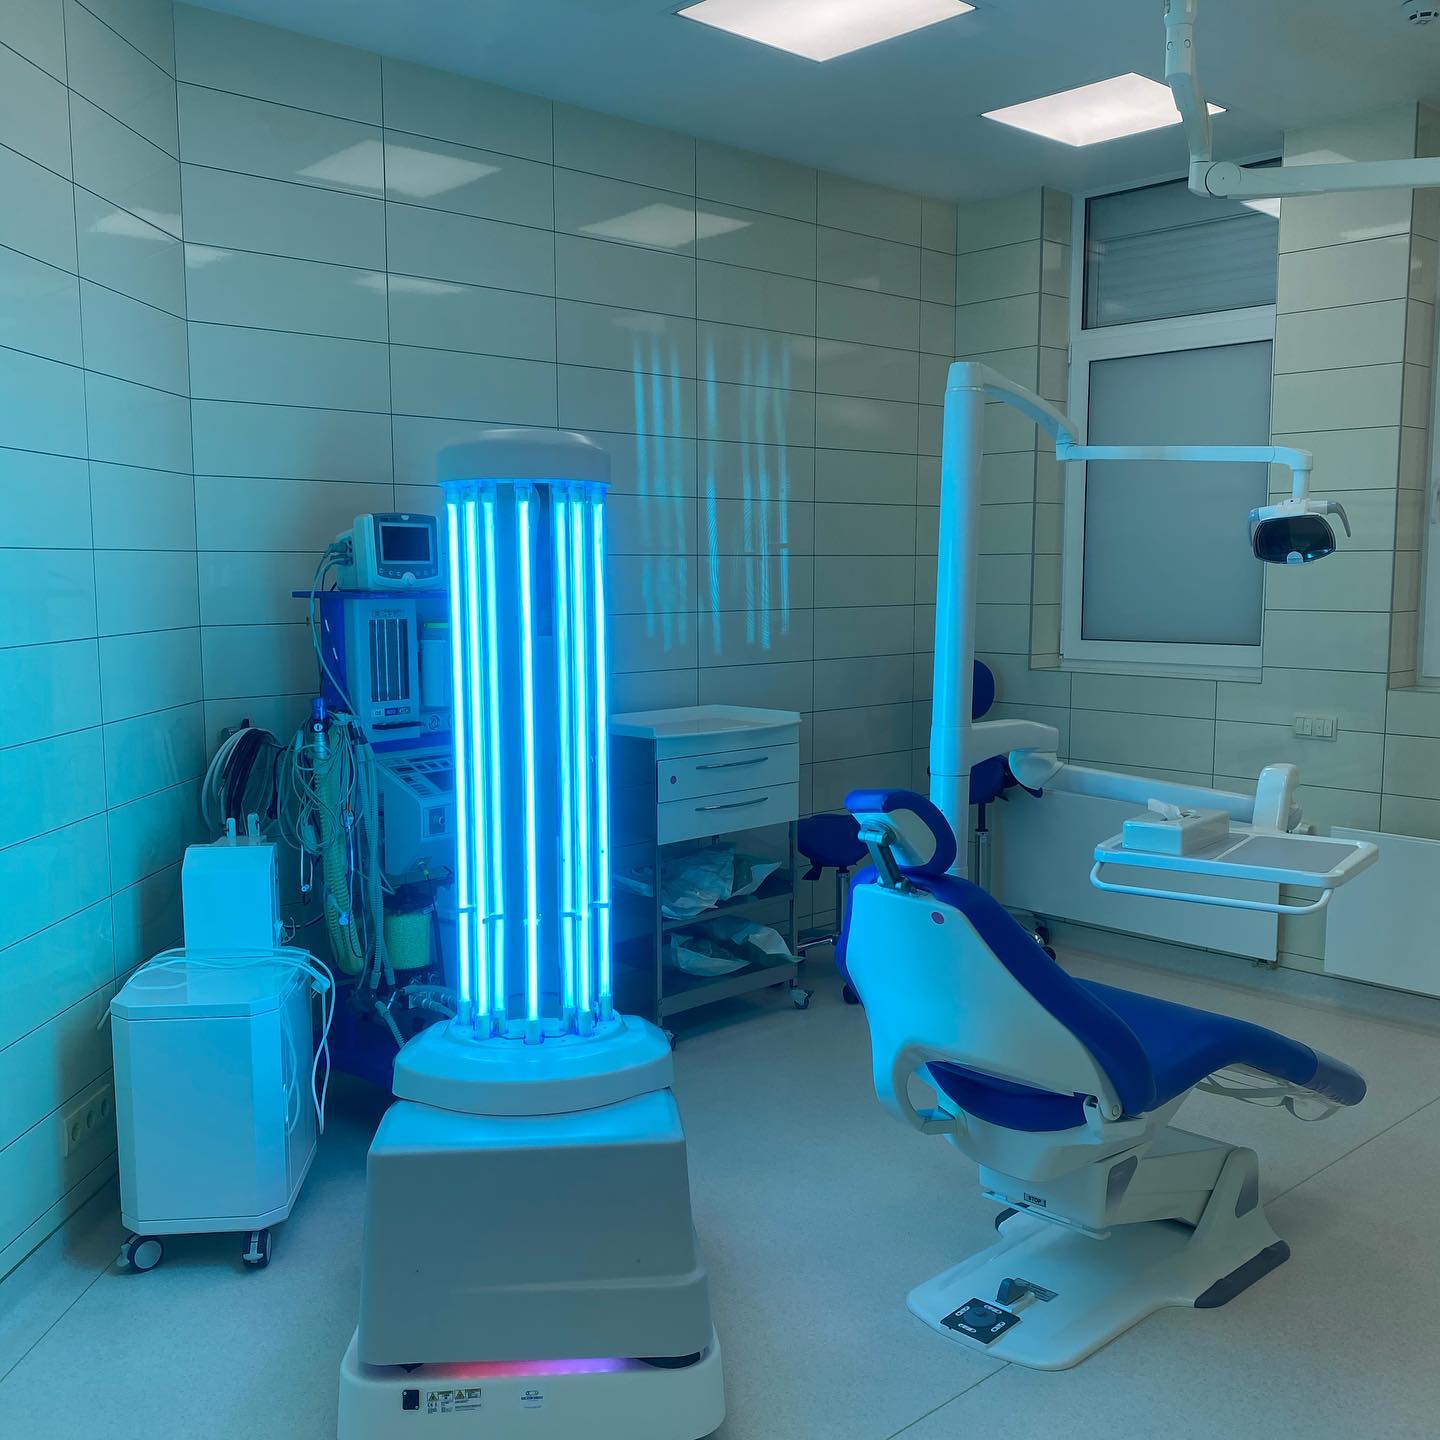 TEFI Digital Dentistry disinfection robot